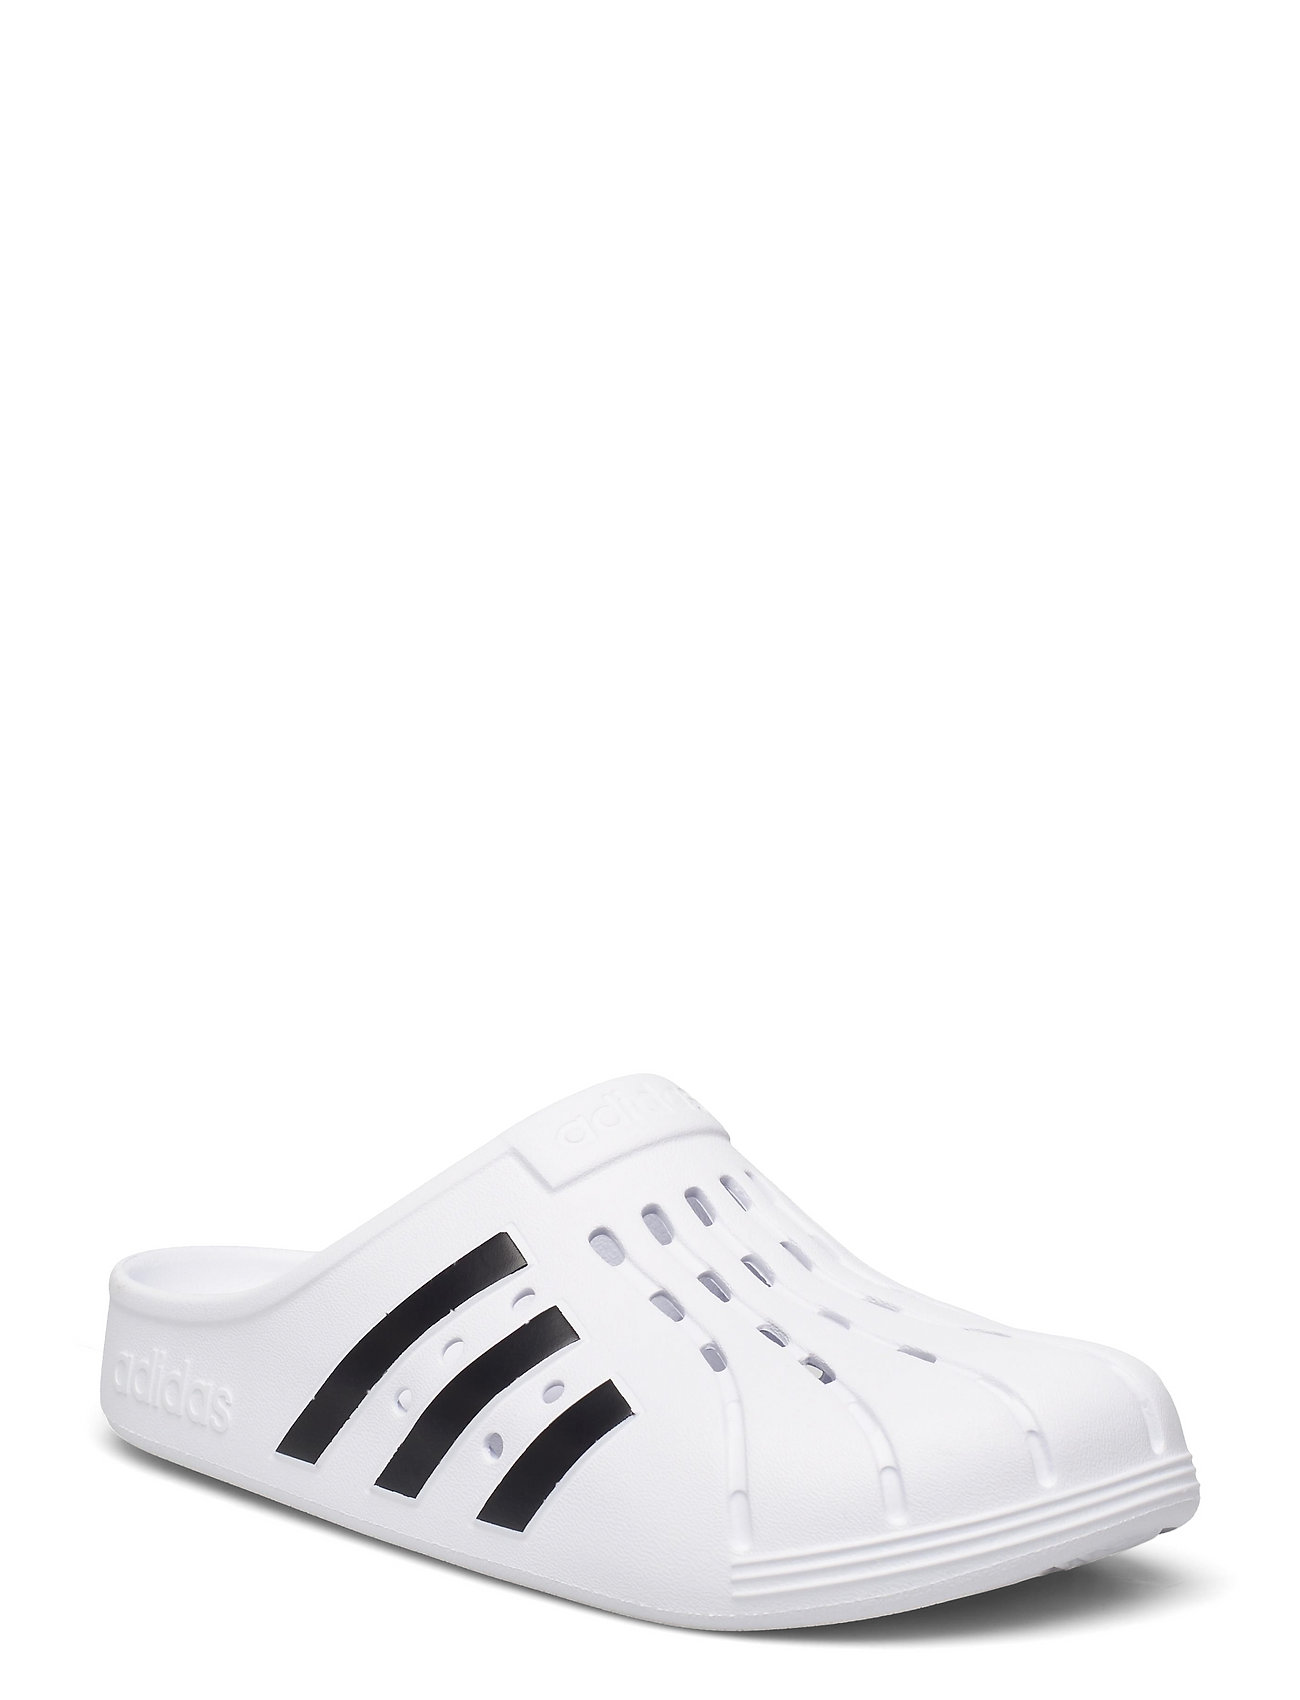 Adilette Clogs Sport Summer Shoes Sandals Pool Sliders White Adidas Sportswear